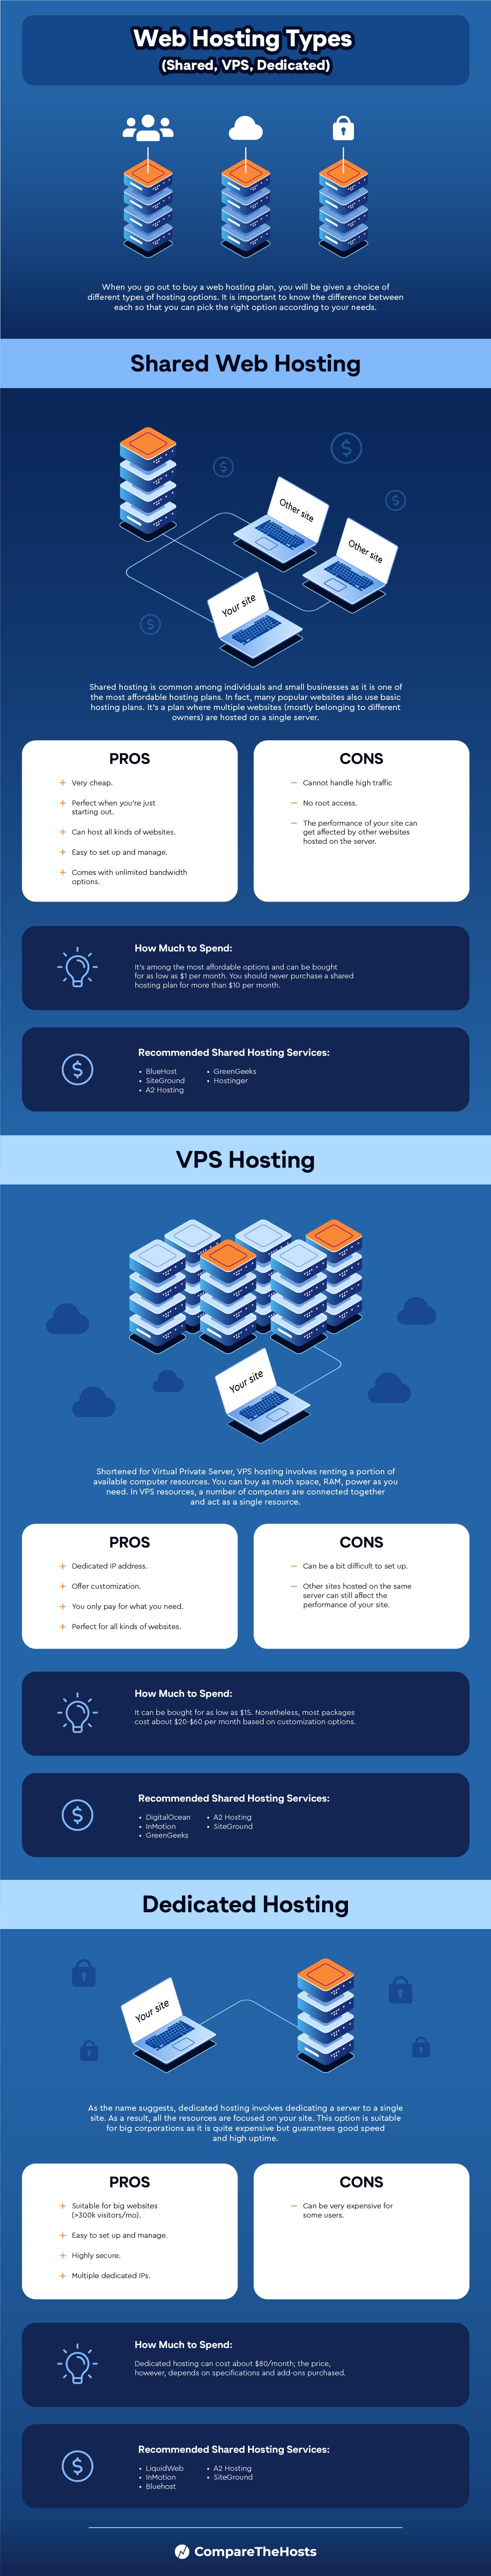 web hosting types infographic